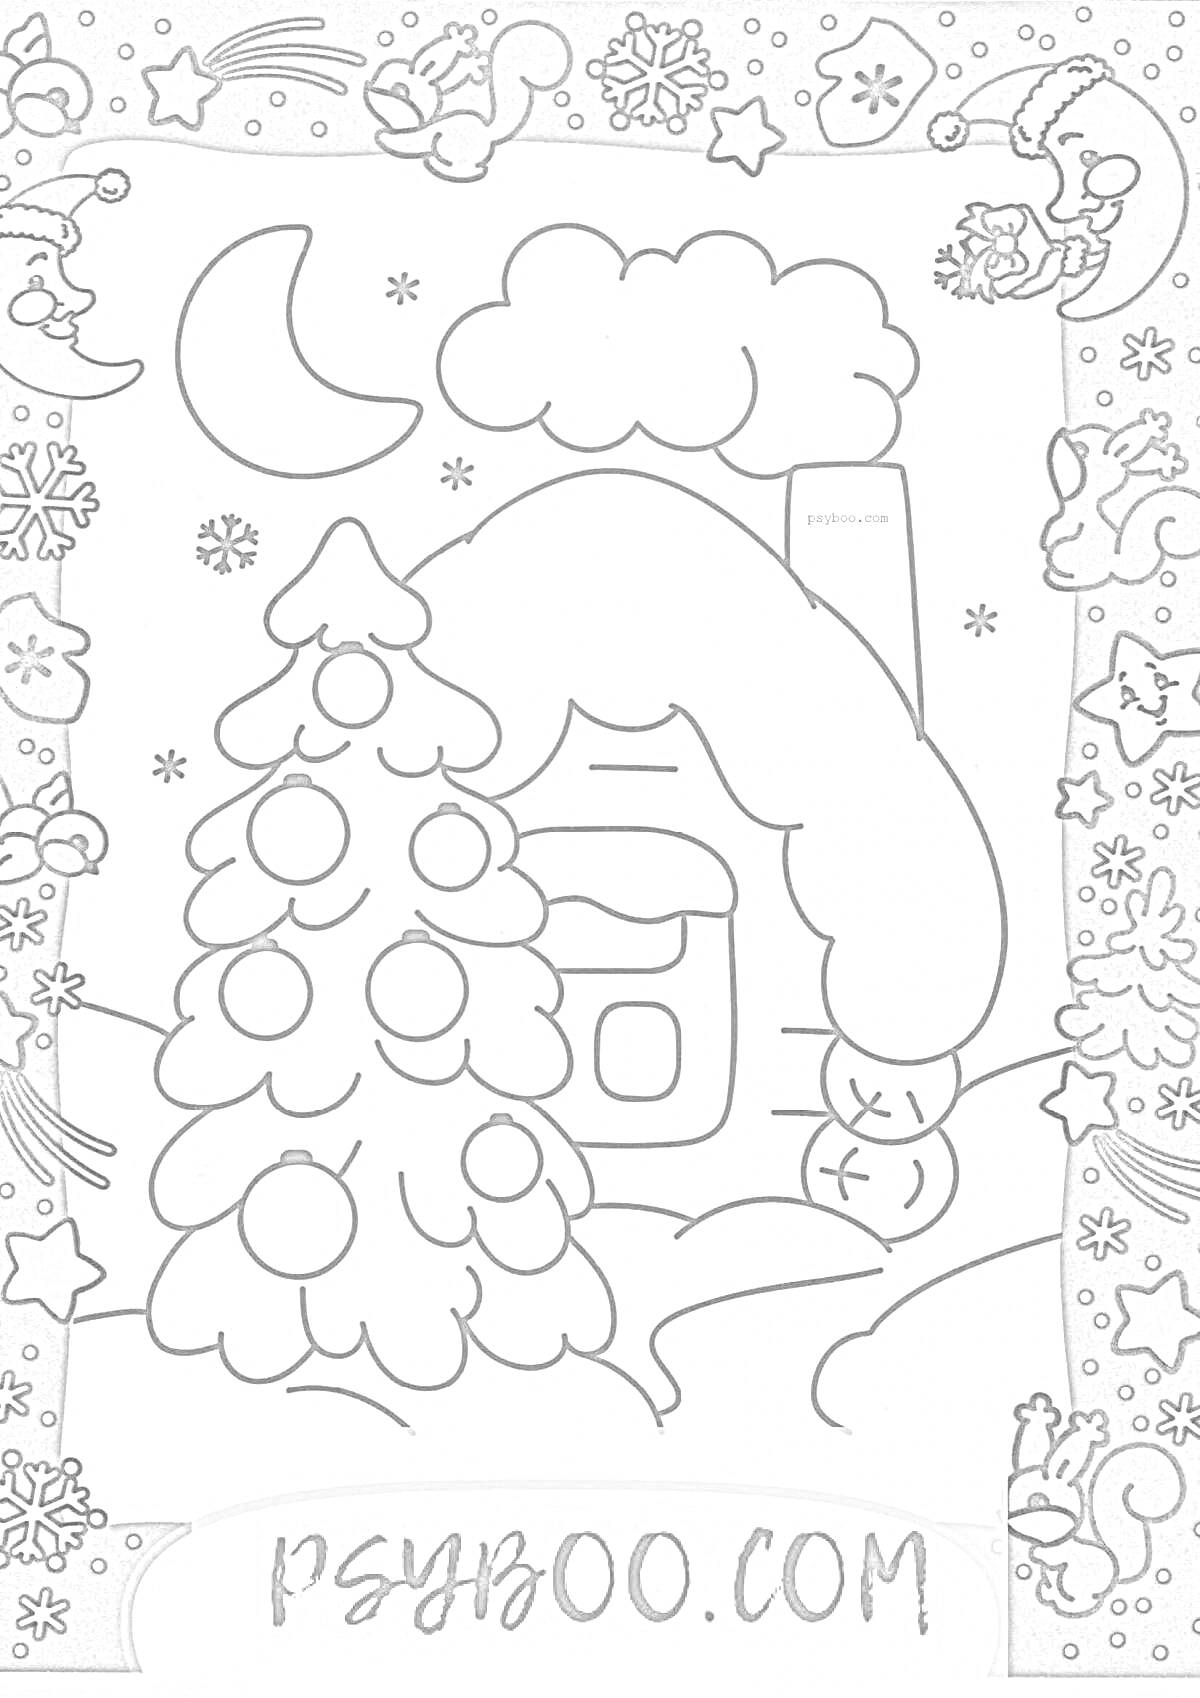 На раскраске изображено: Домик, Дед Мороз, Снег, Зима, Украшения, Звезды, Снежинки, Луна, Облака, Зимний пейзаж